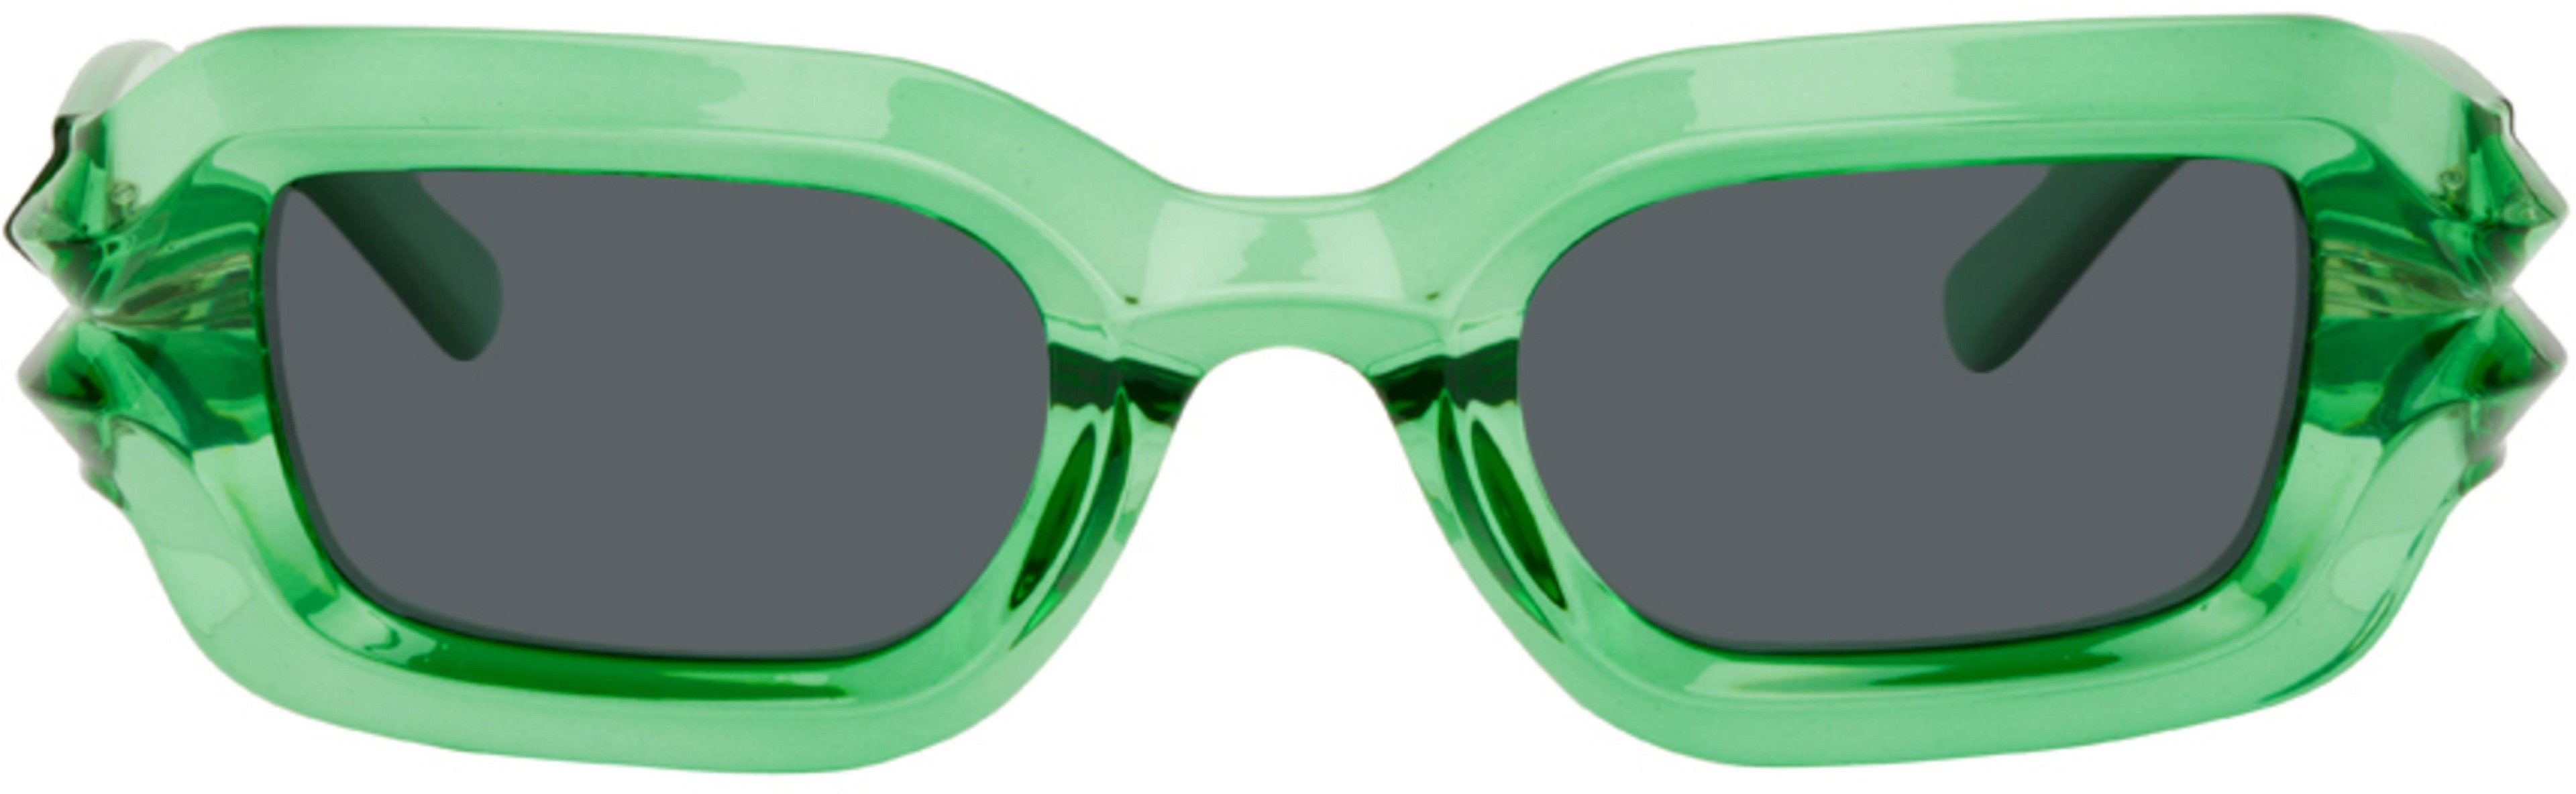 Green Bolu Sunglasses by A BETTER FEELING